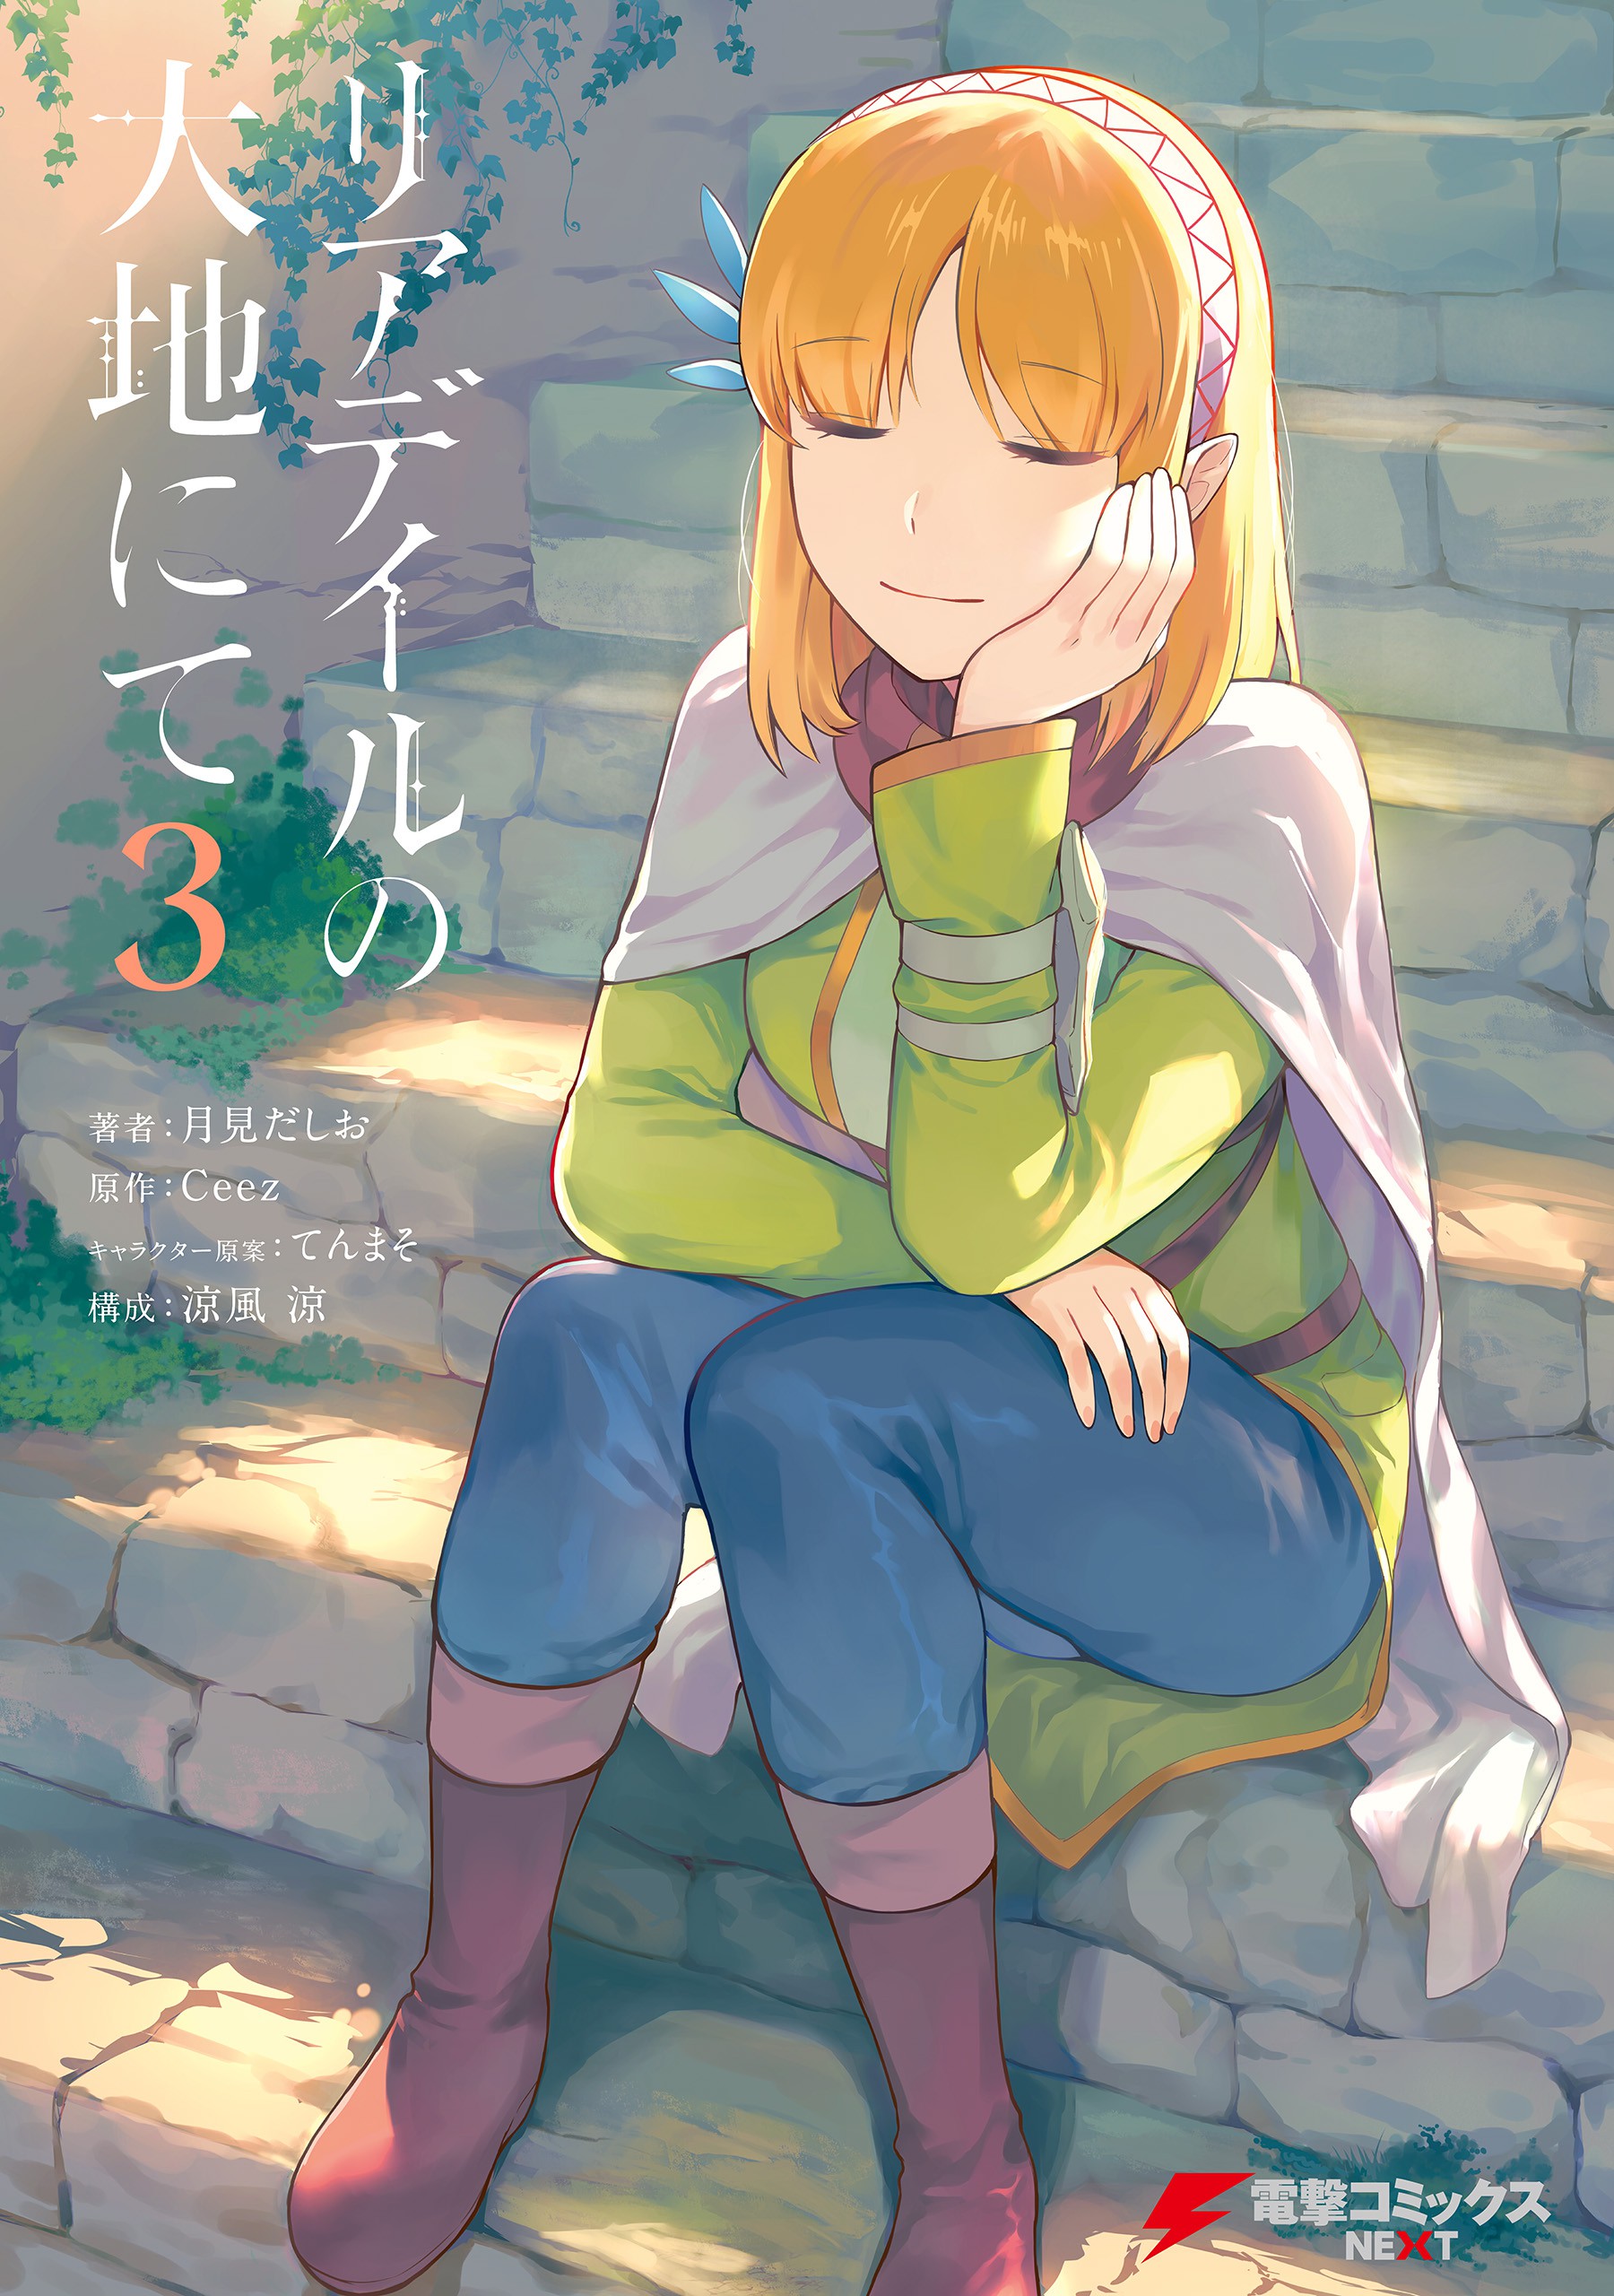 Volume 2 (manga), In the Land of Leadale Wiki